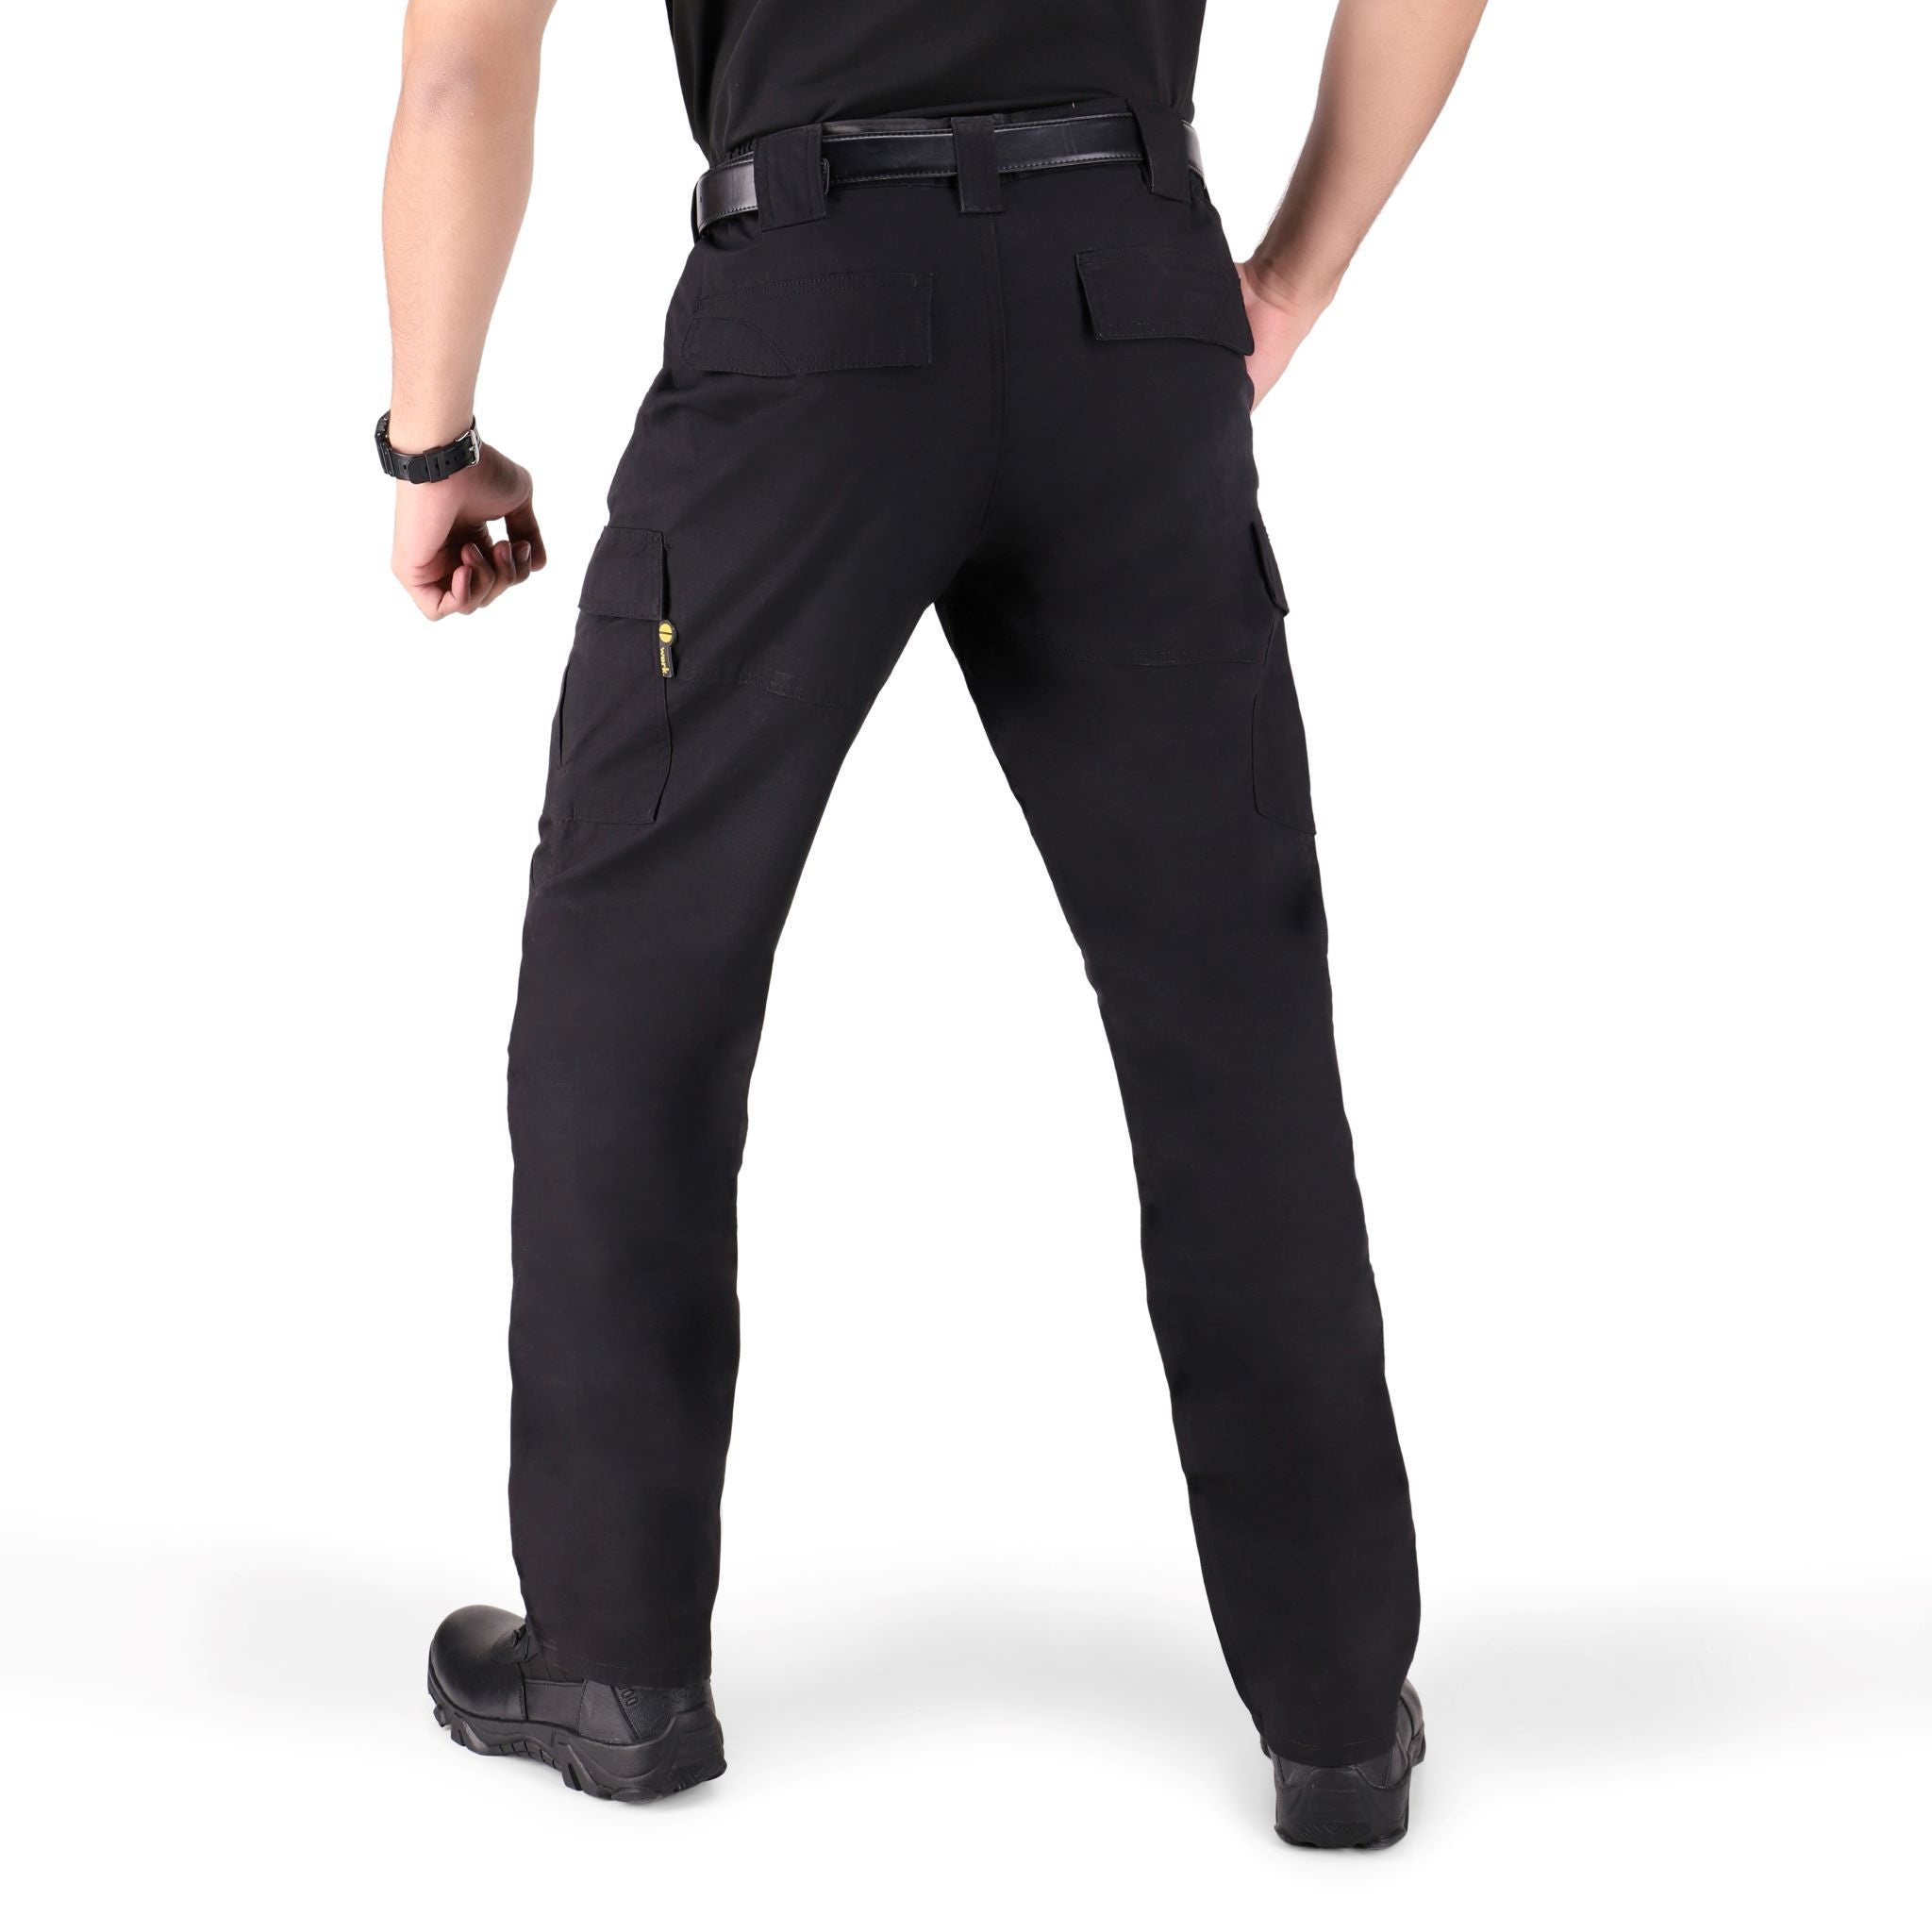 WHITEDUCK Tactical Pants - Black W28 x L32 / Black